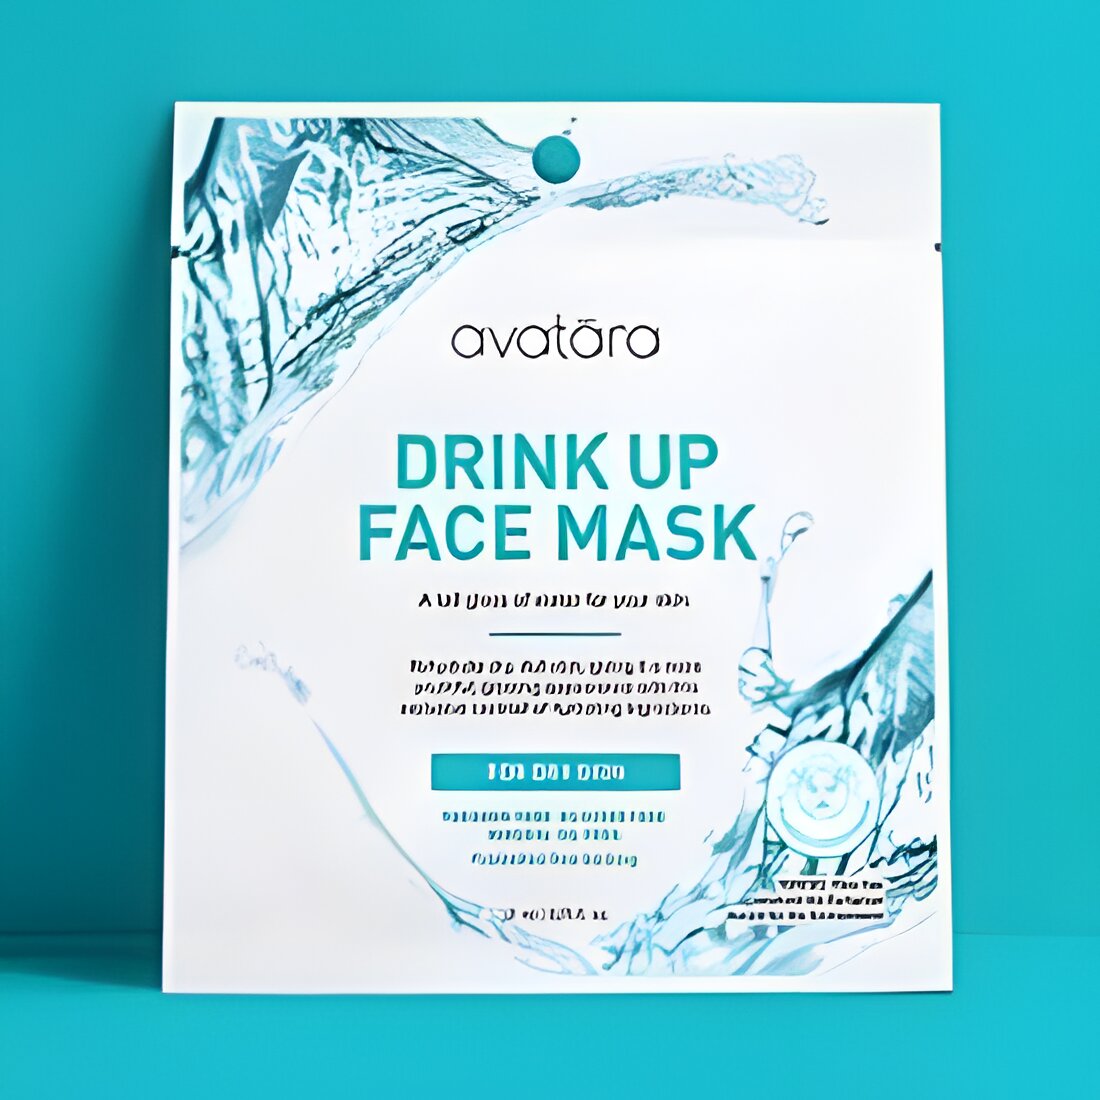 Free Avatara Drink Up Face Mask